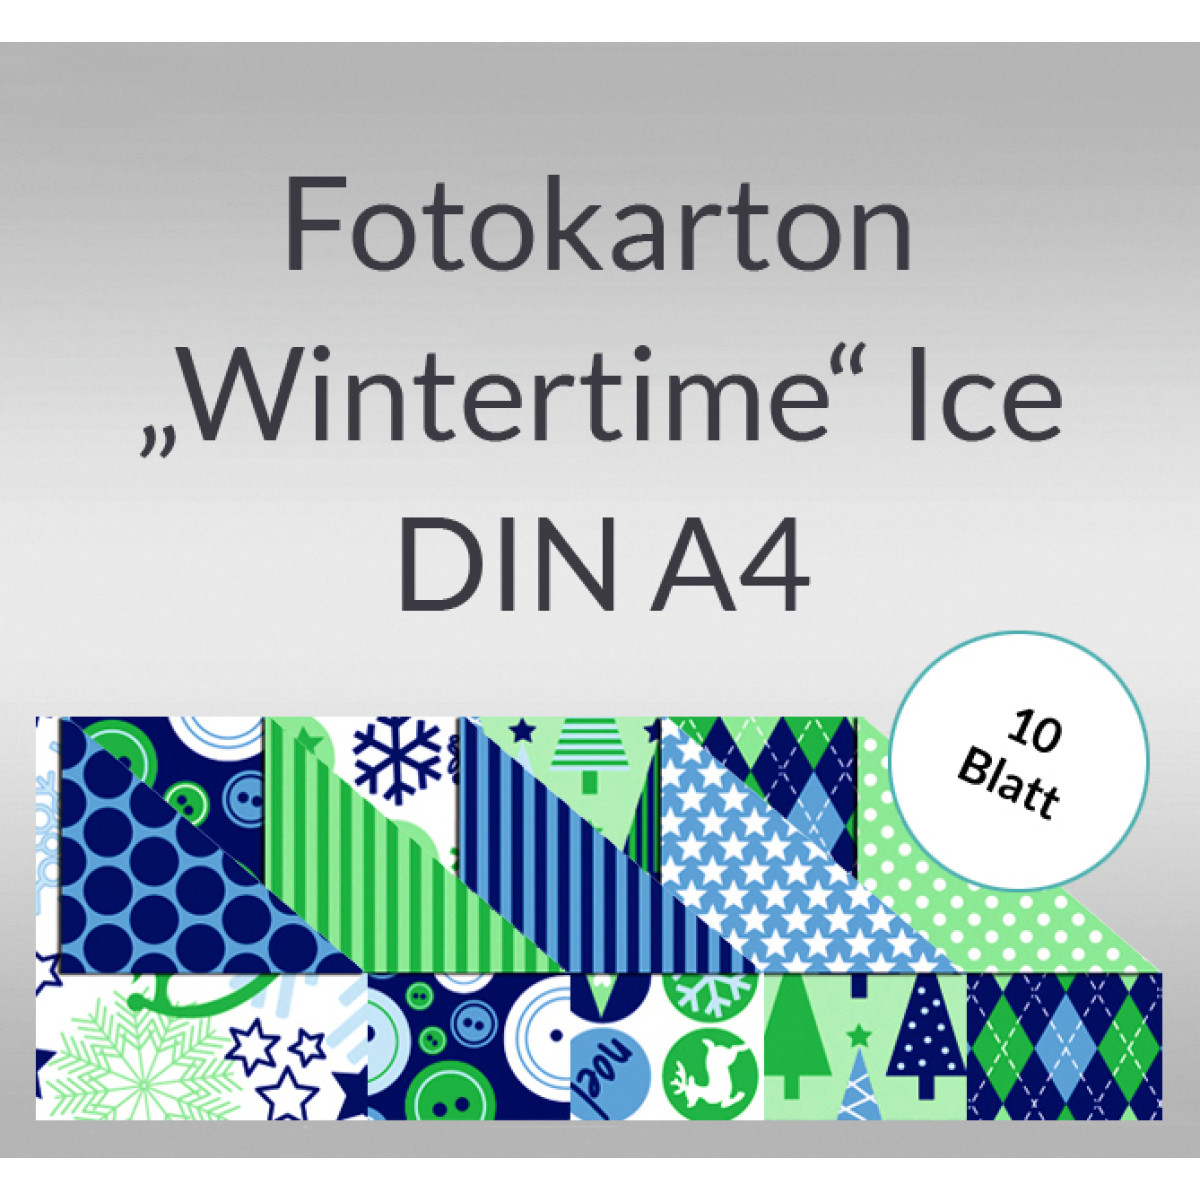 Fotokarton "Wintertime" Ice DIN A4 - 10 Blatt